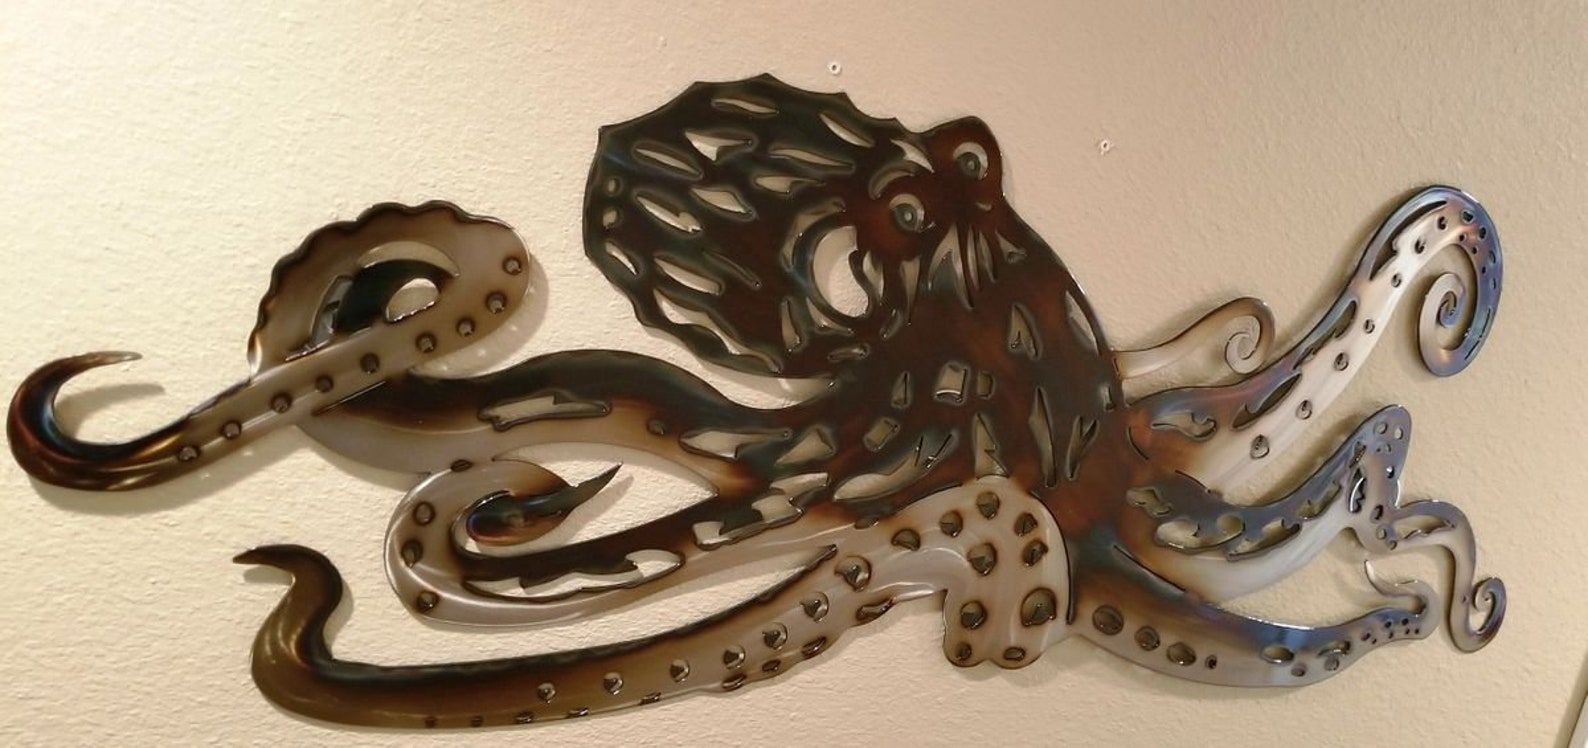 Octopus Kraken Torched Metal Wall Art | Etsy For Octopus Metal Wall Sculptures (View 7 of 15)